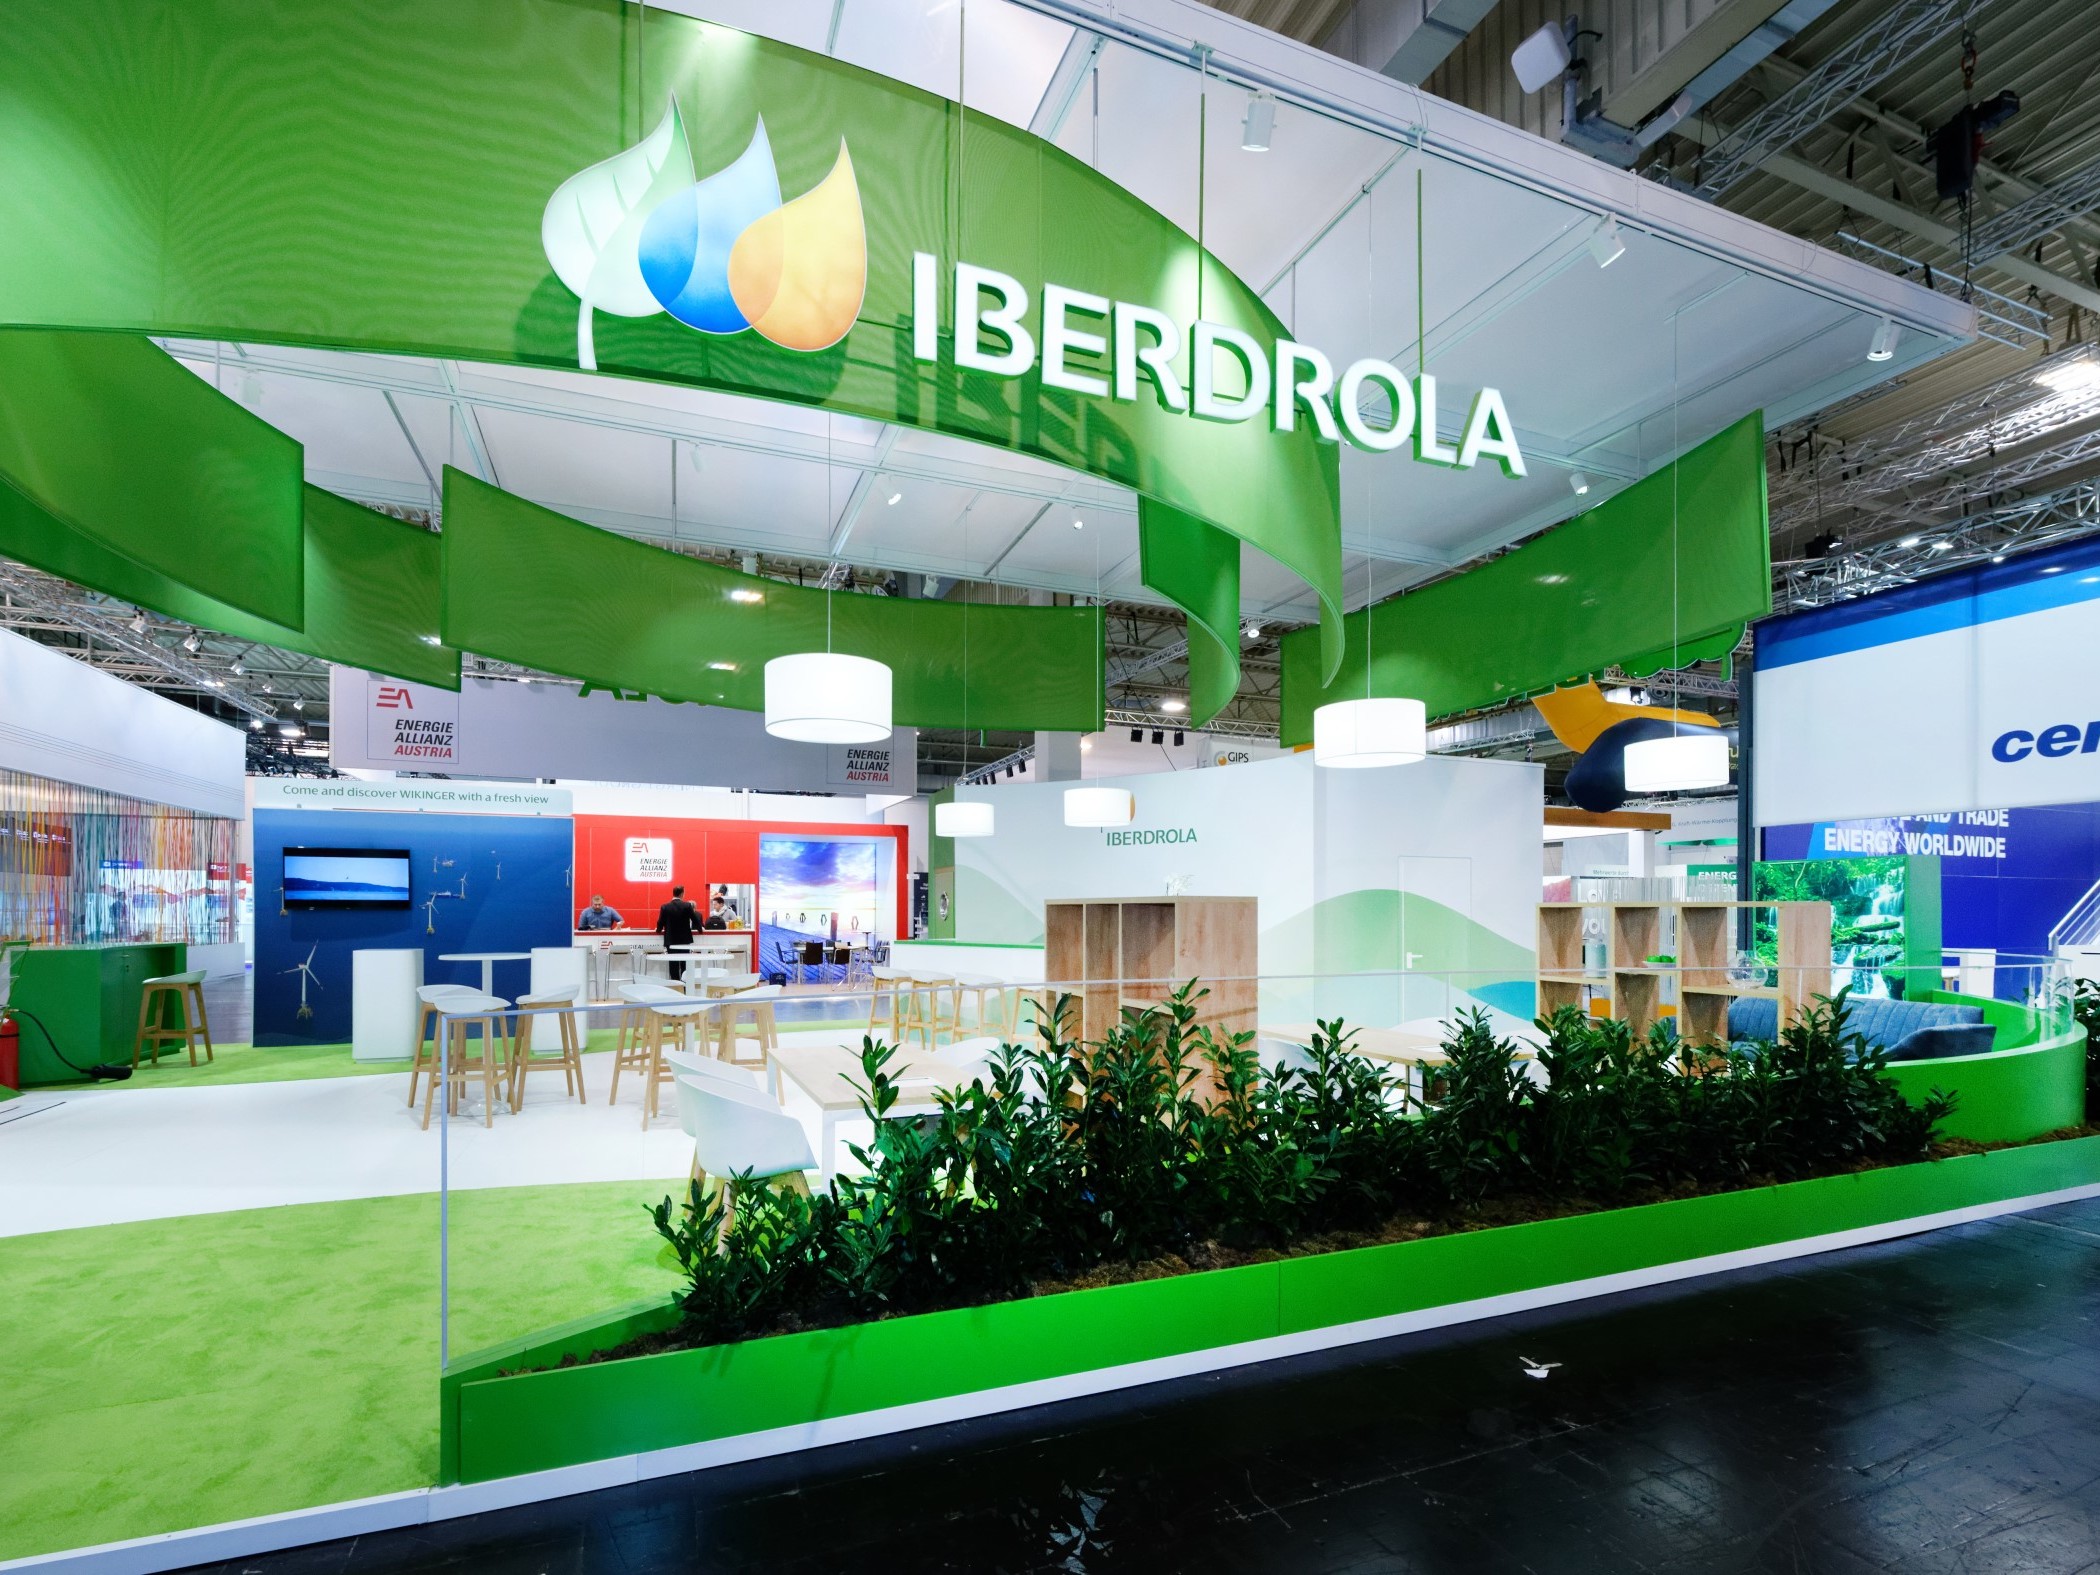 Project Iberdrola Stand E-World 2019 Essen